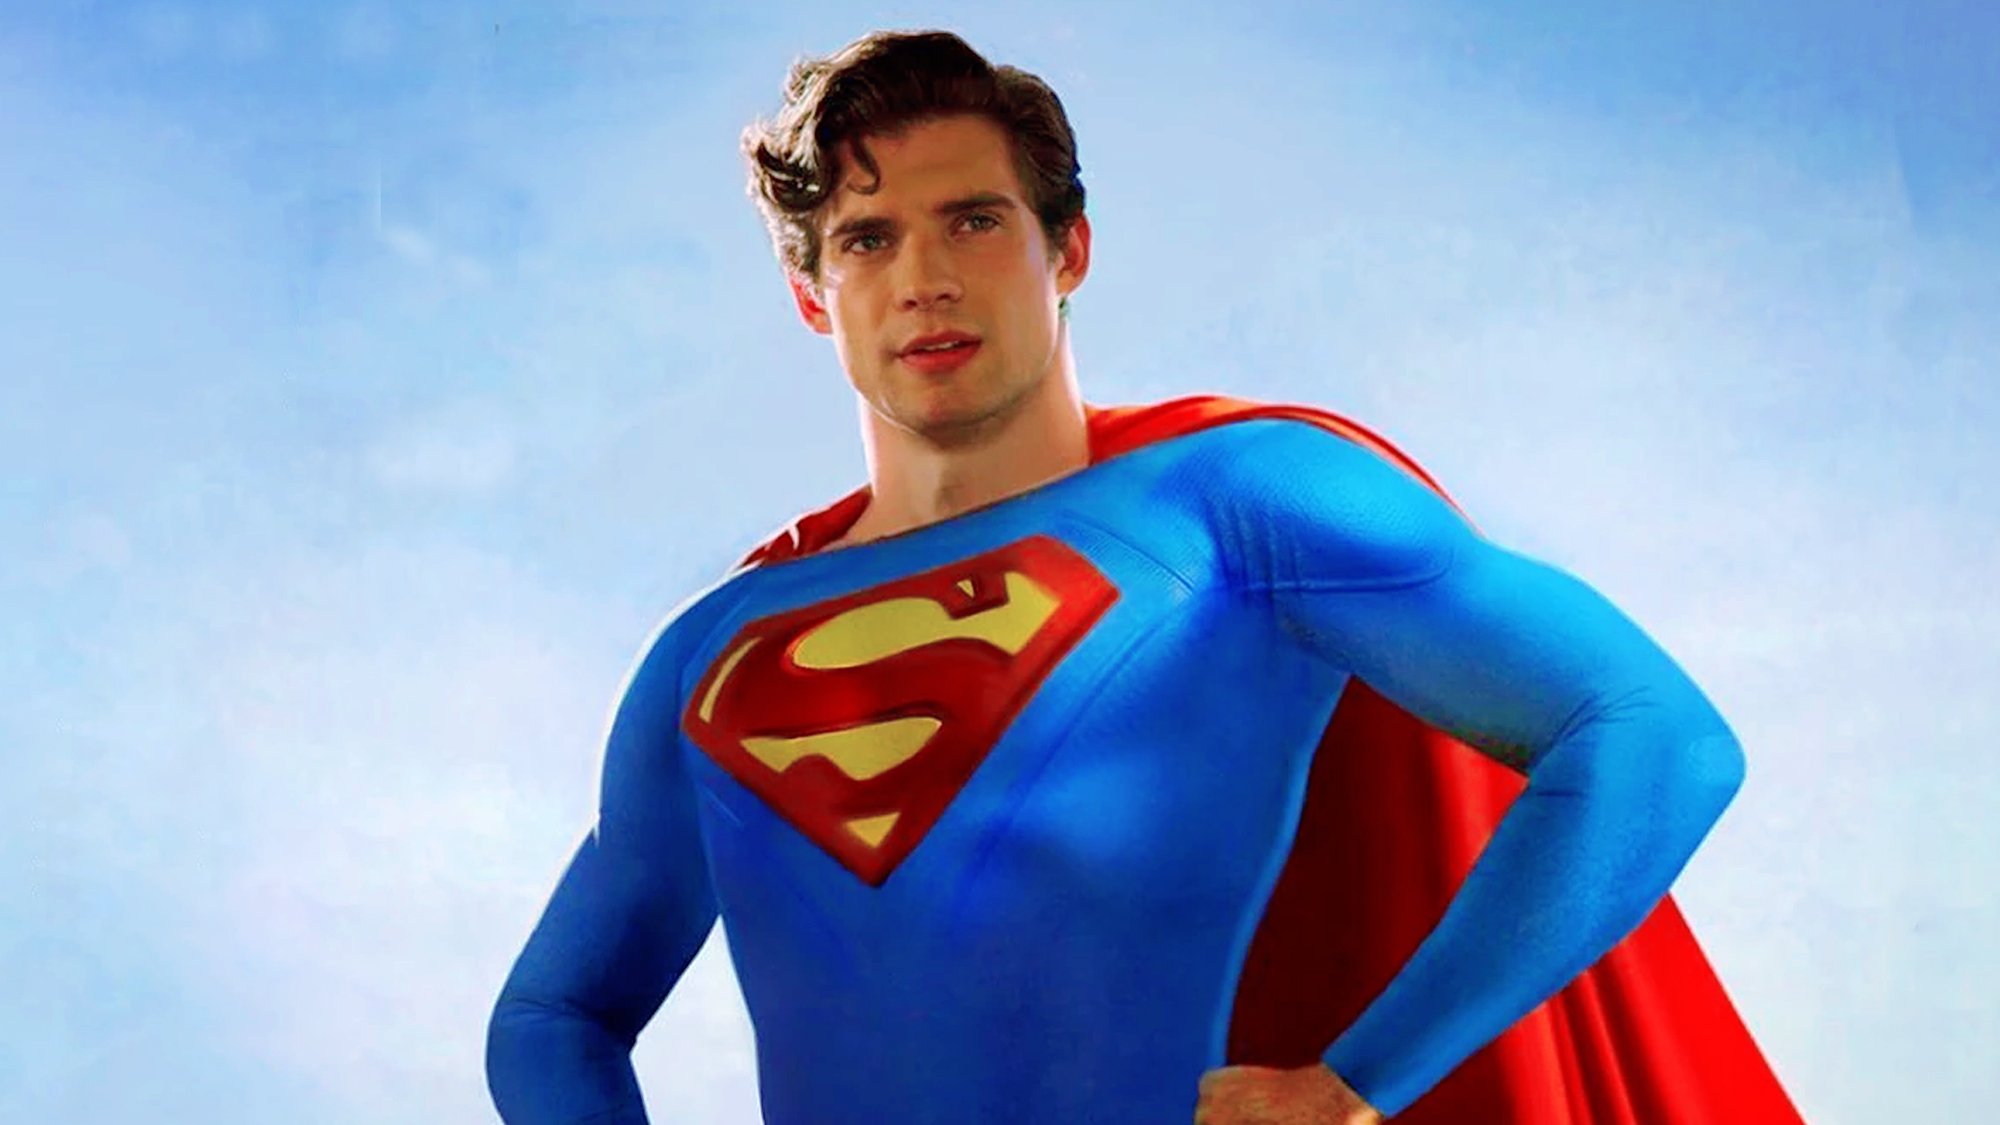 DCU Superman concept art : r/superman